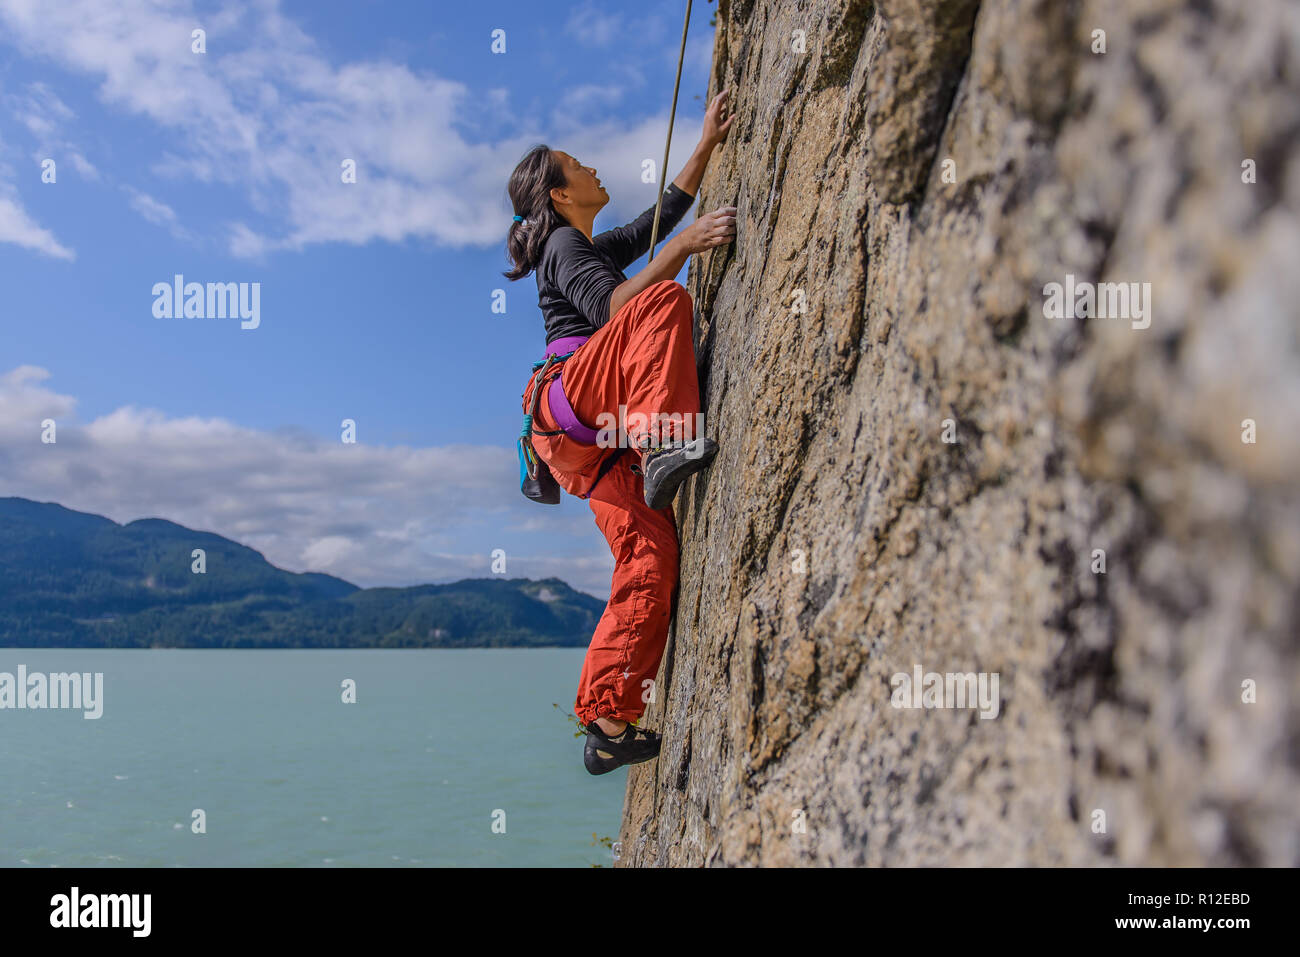 Woman rock climbing, Squamish, Canada Stock Photo